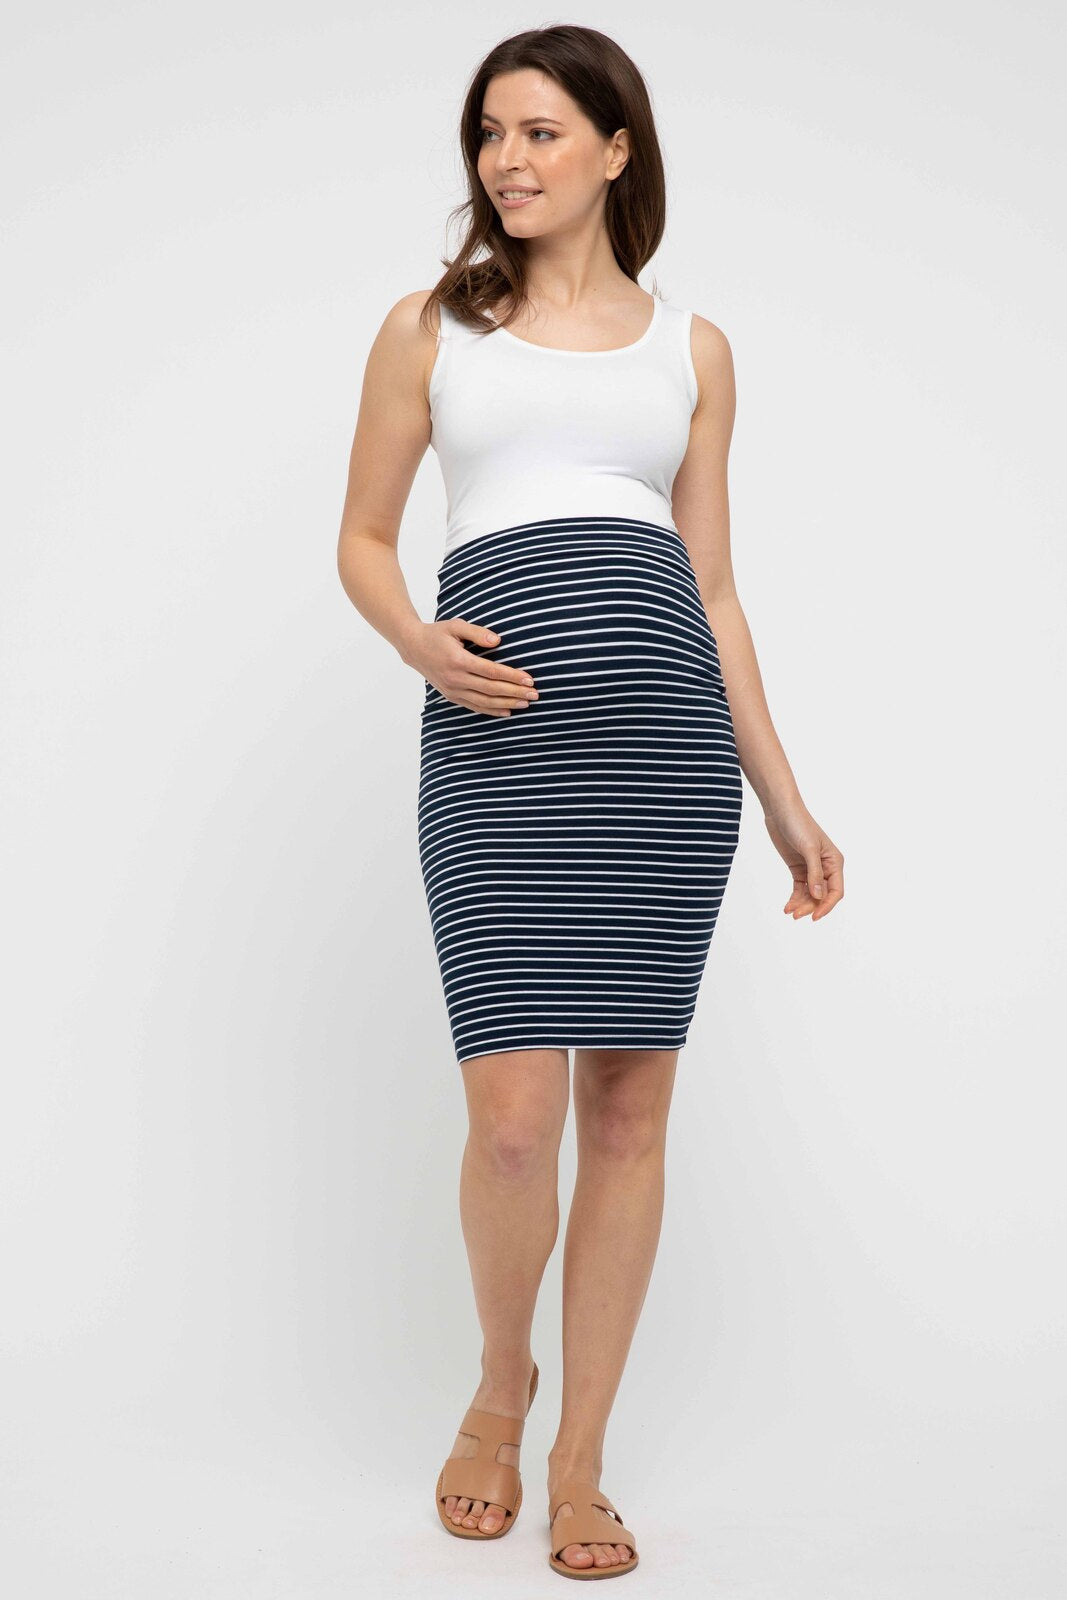 Organic Bamboo Maternity Tube Skirt Skirt from Bamboo Body maternity online store brisbane sydney perth australia